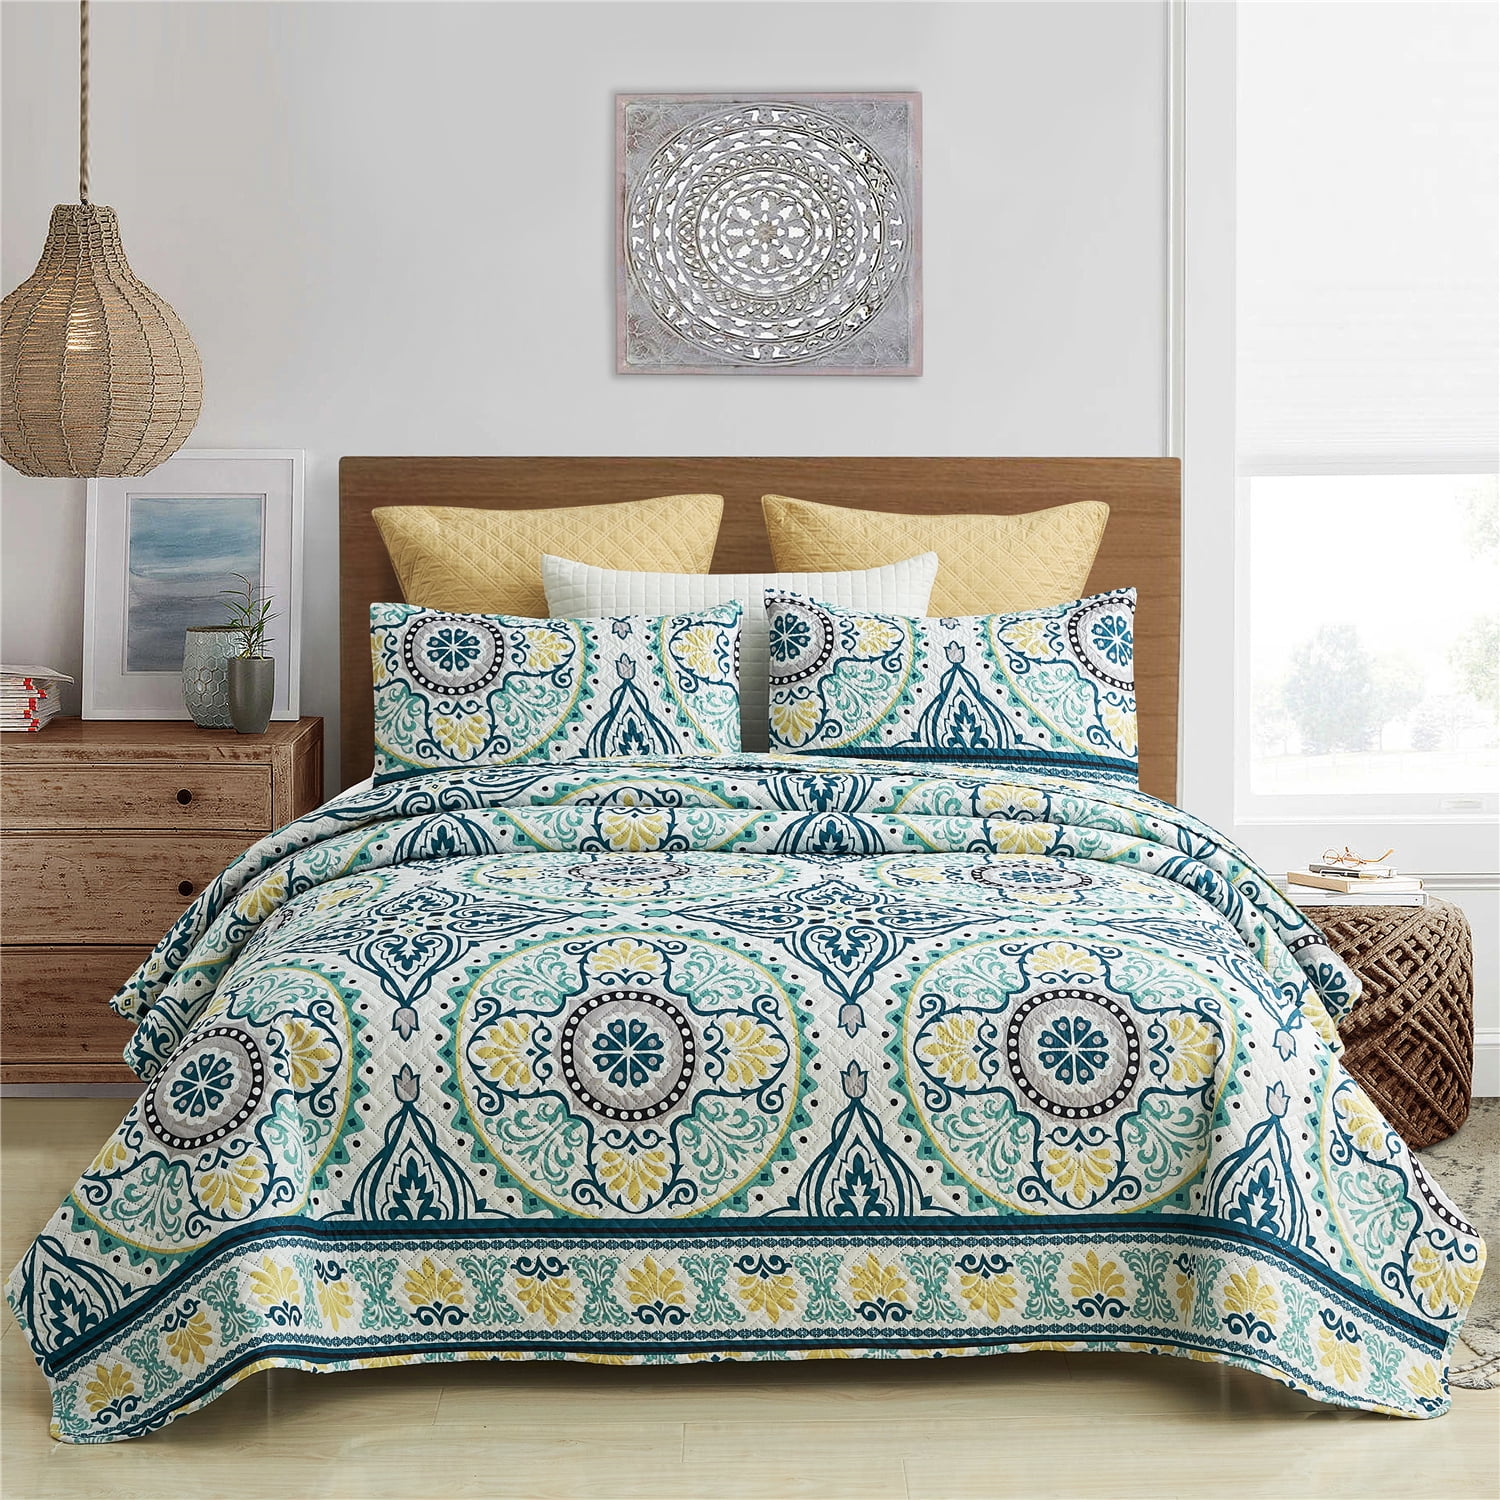 Joniy 3Pc Quilt Bedspread Sets Bedding Coverlet Bedroom Floral Queen King Size 